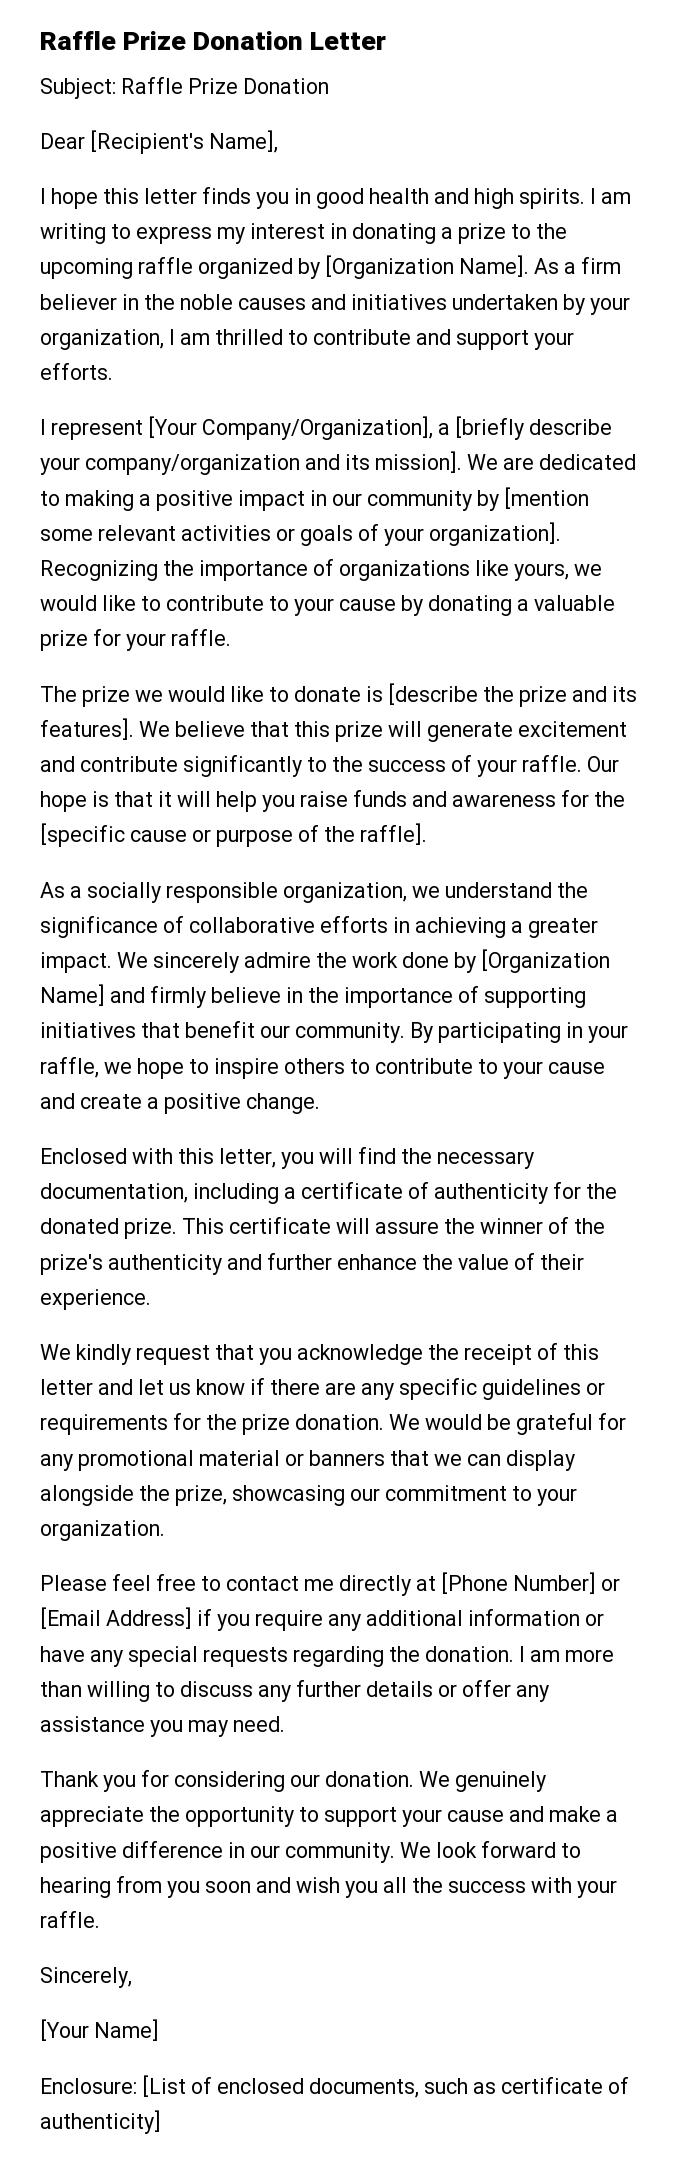 Raffle Prize Donation Letter